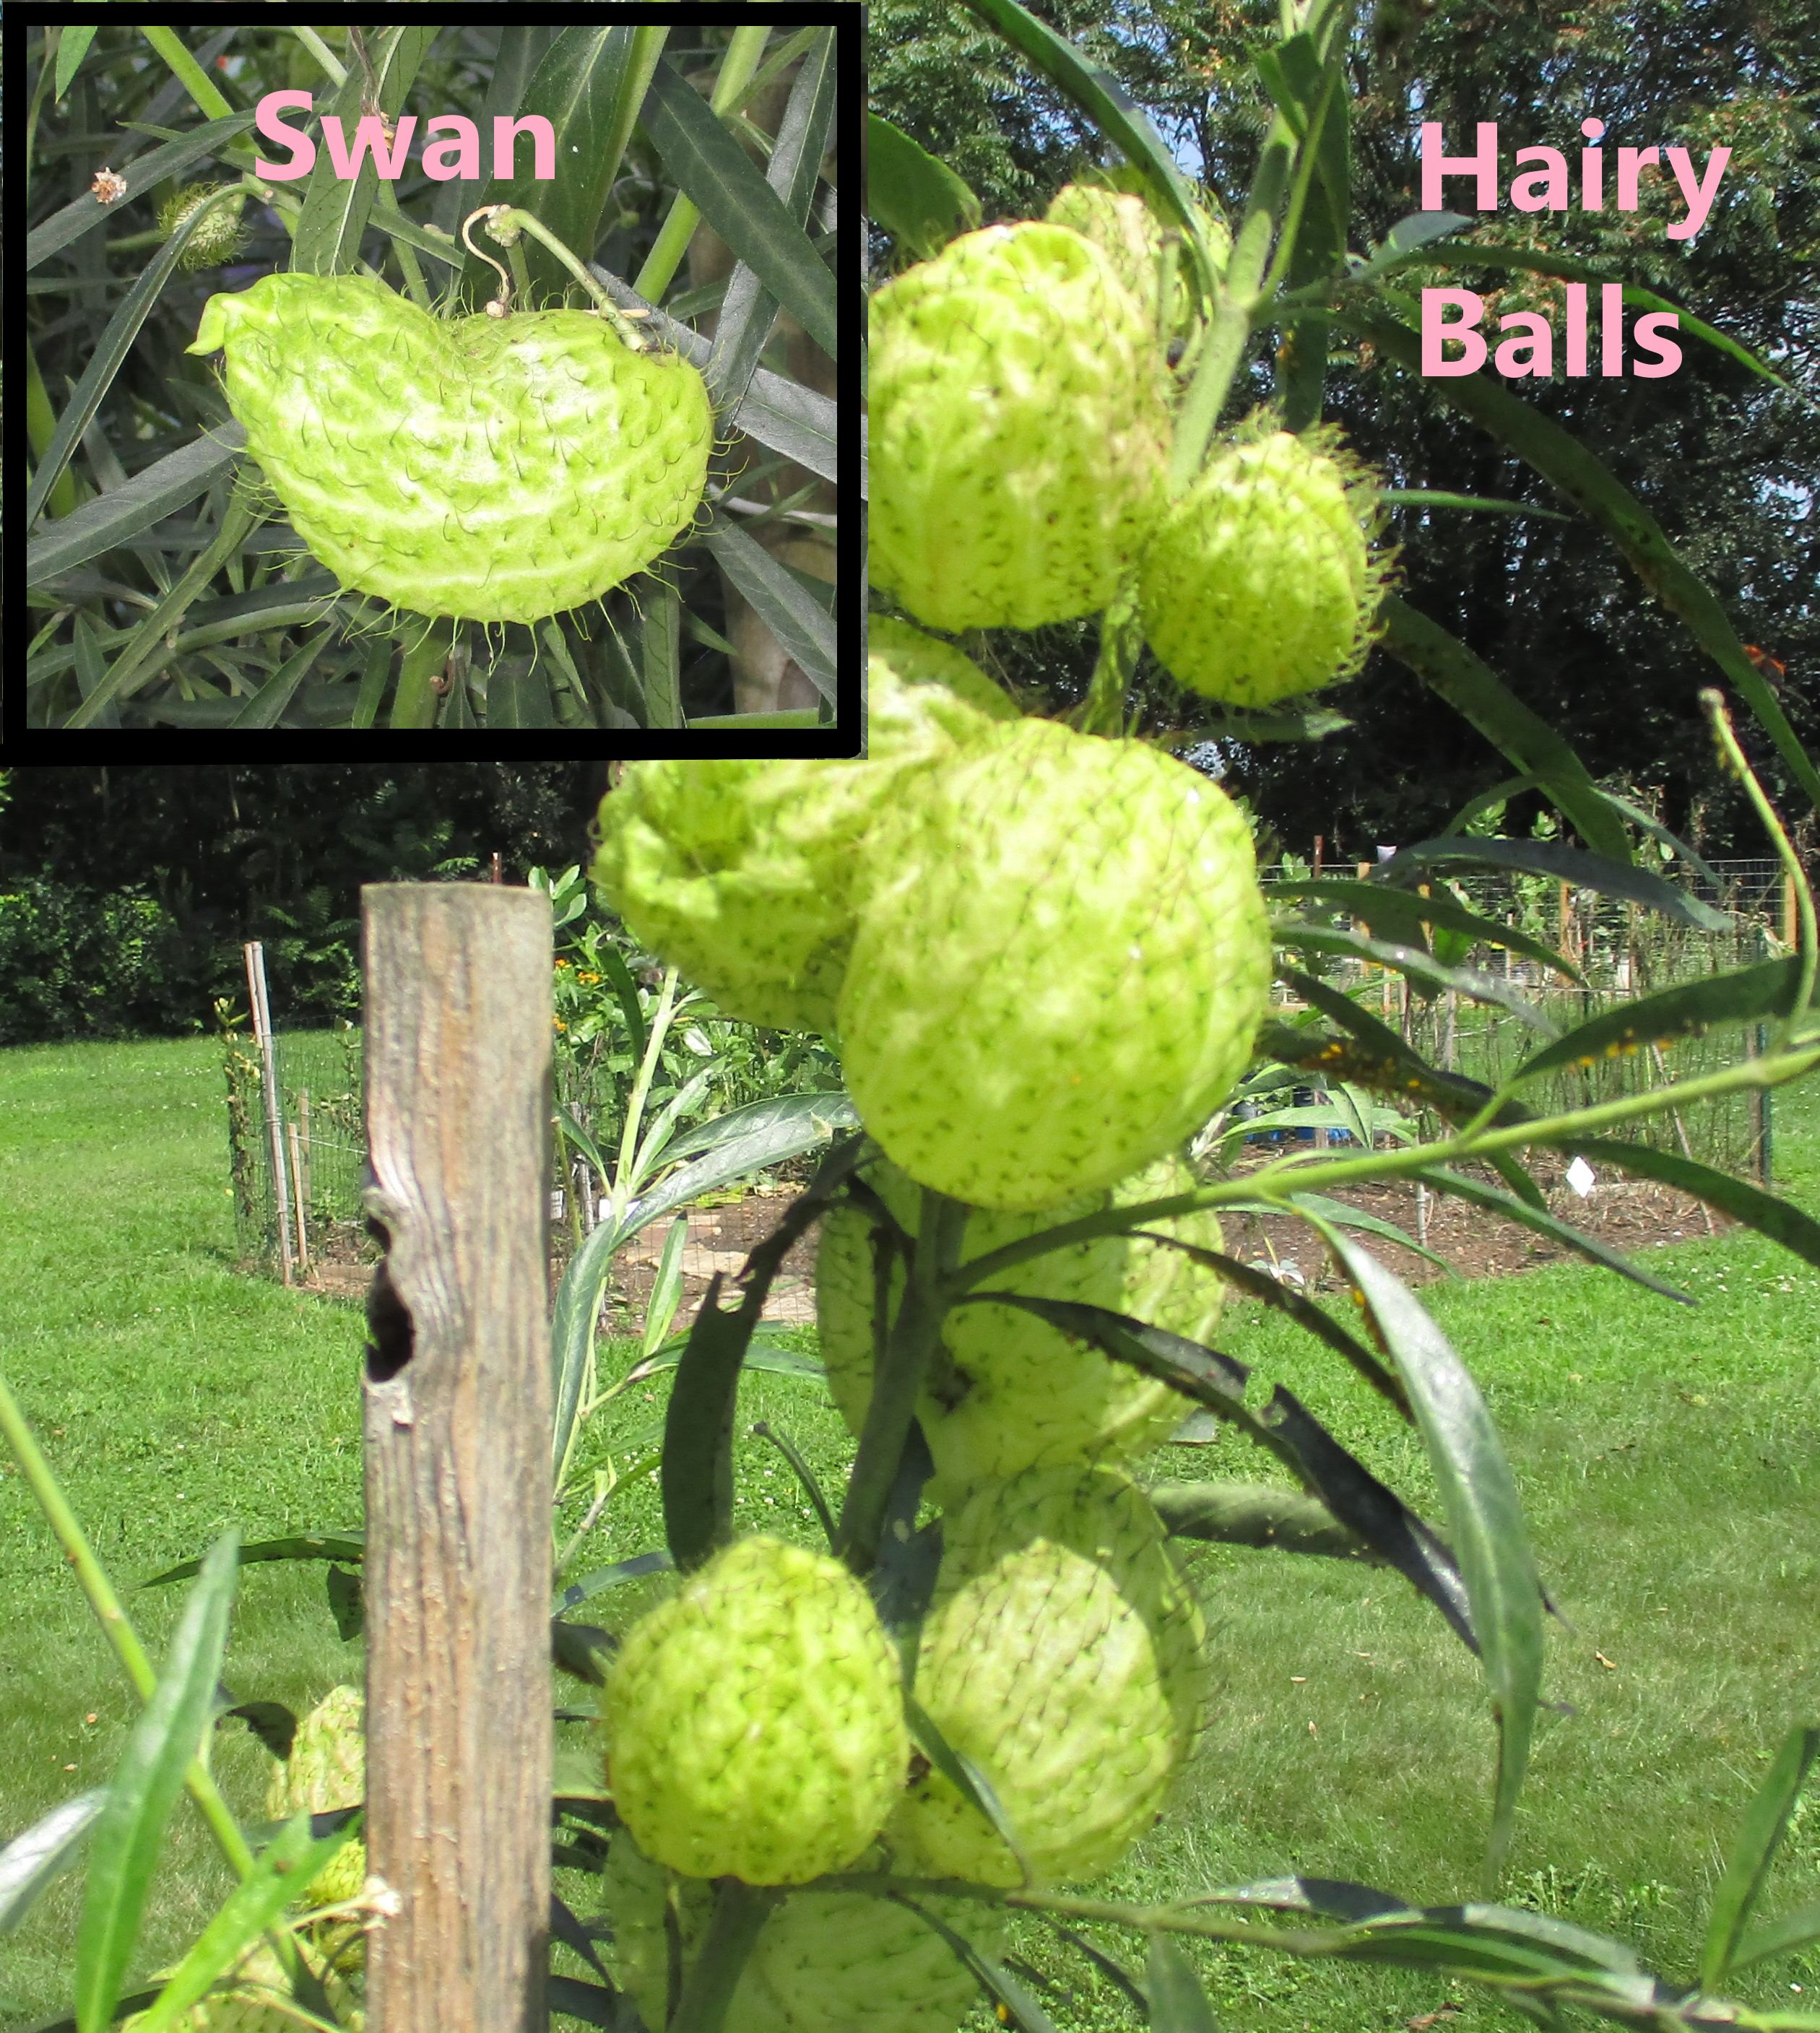 Hairy Balls and Swan Milkweed pods